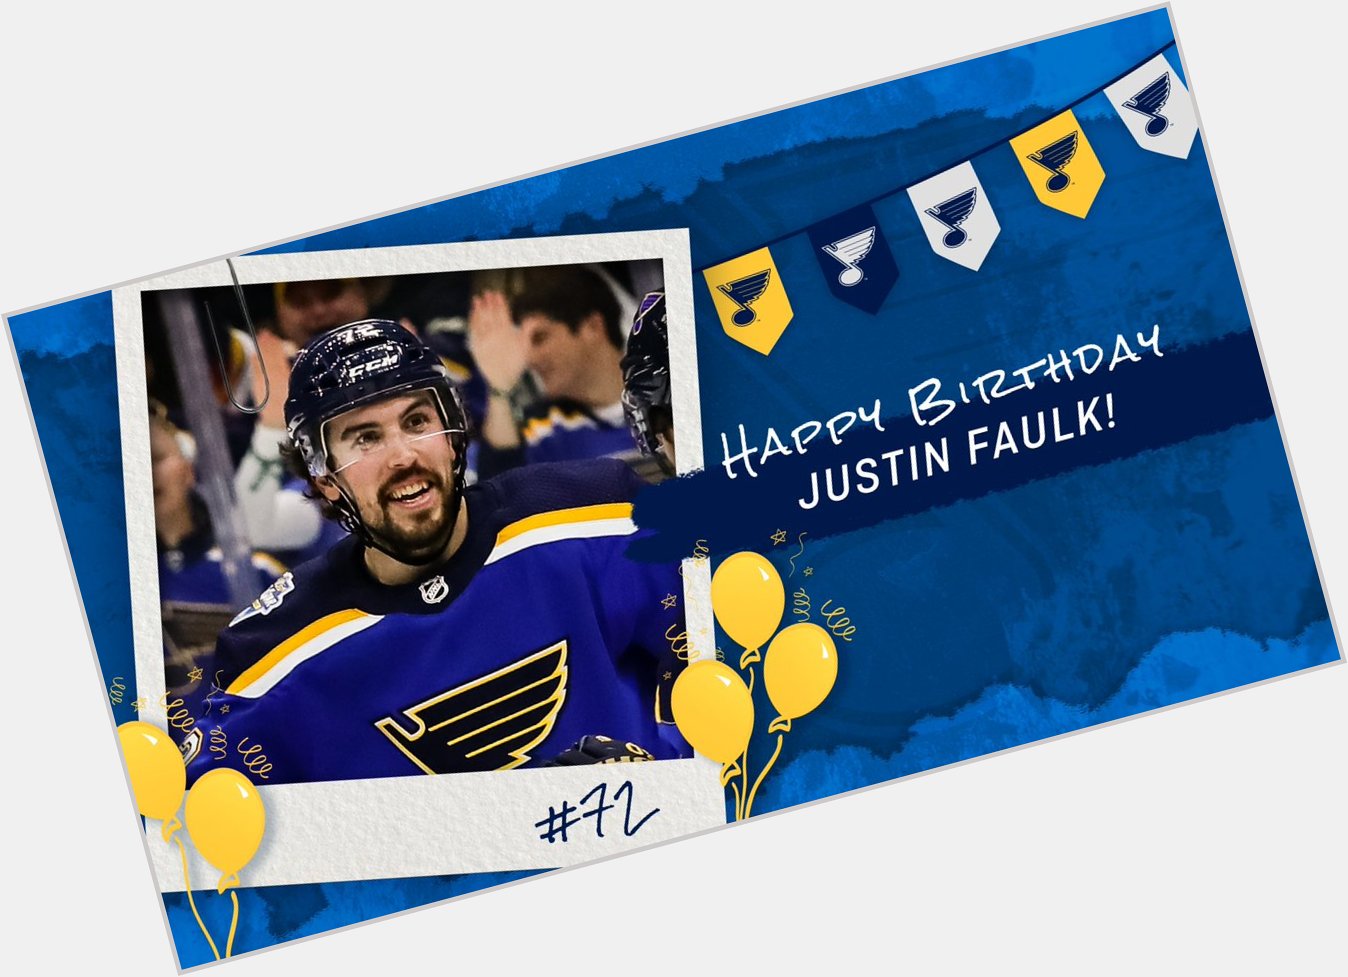 Happy birthday to Justin Faulk! 